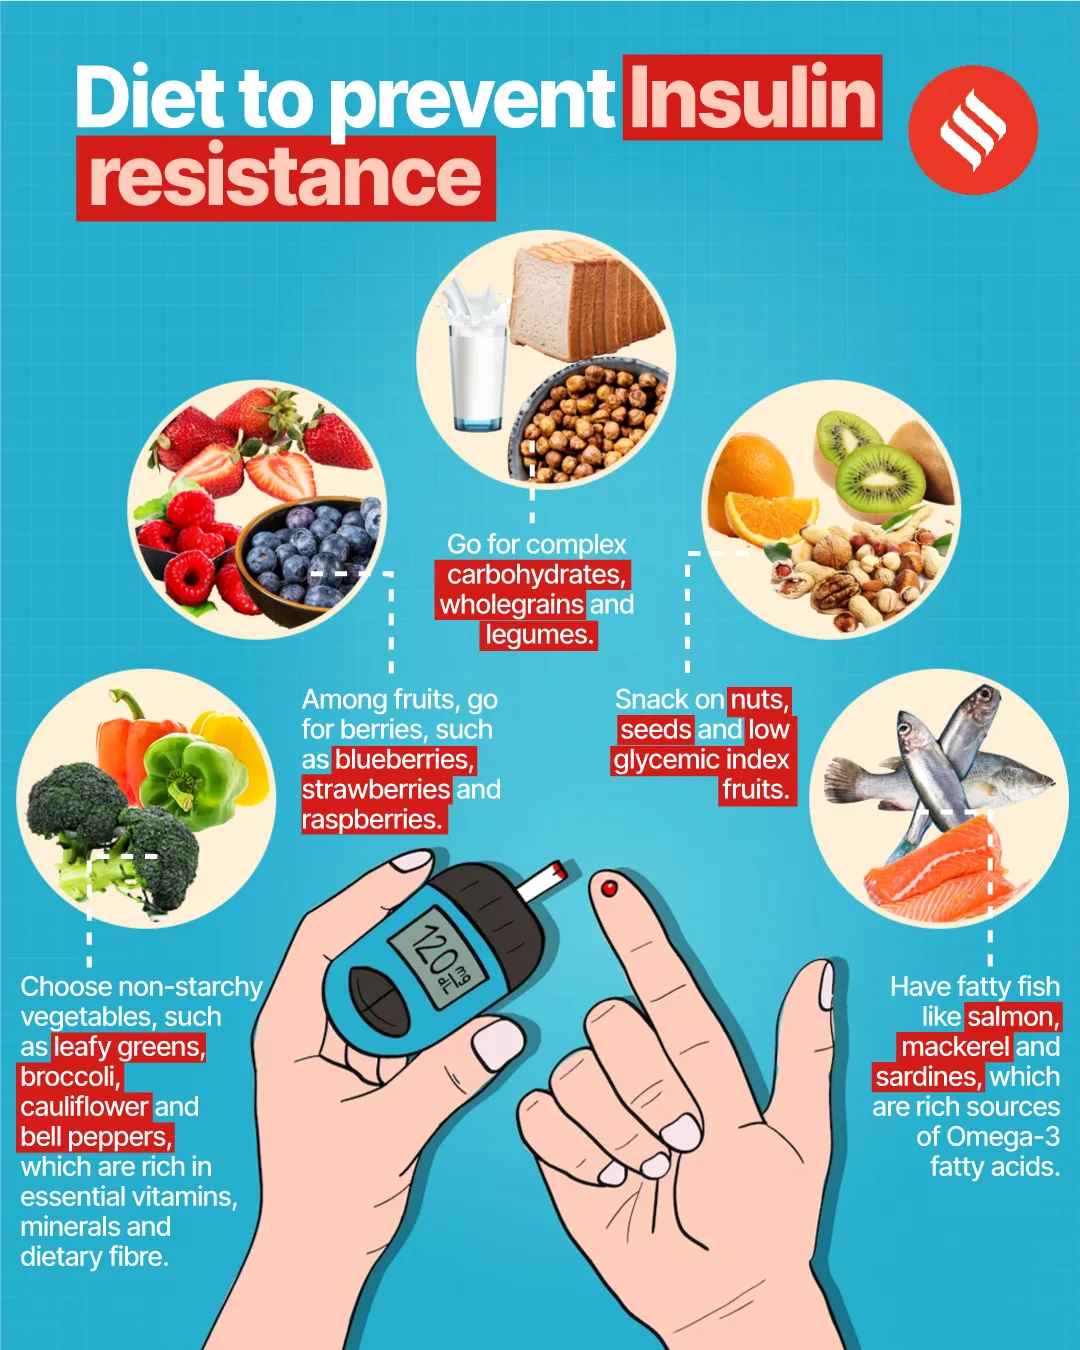 Preventing insulin resistance